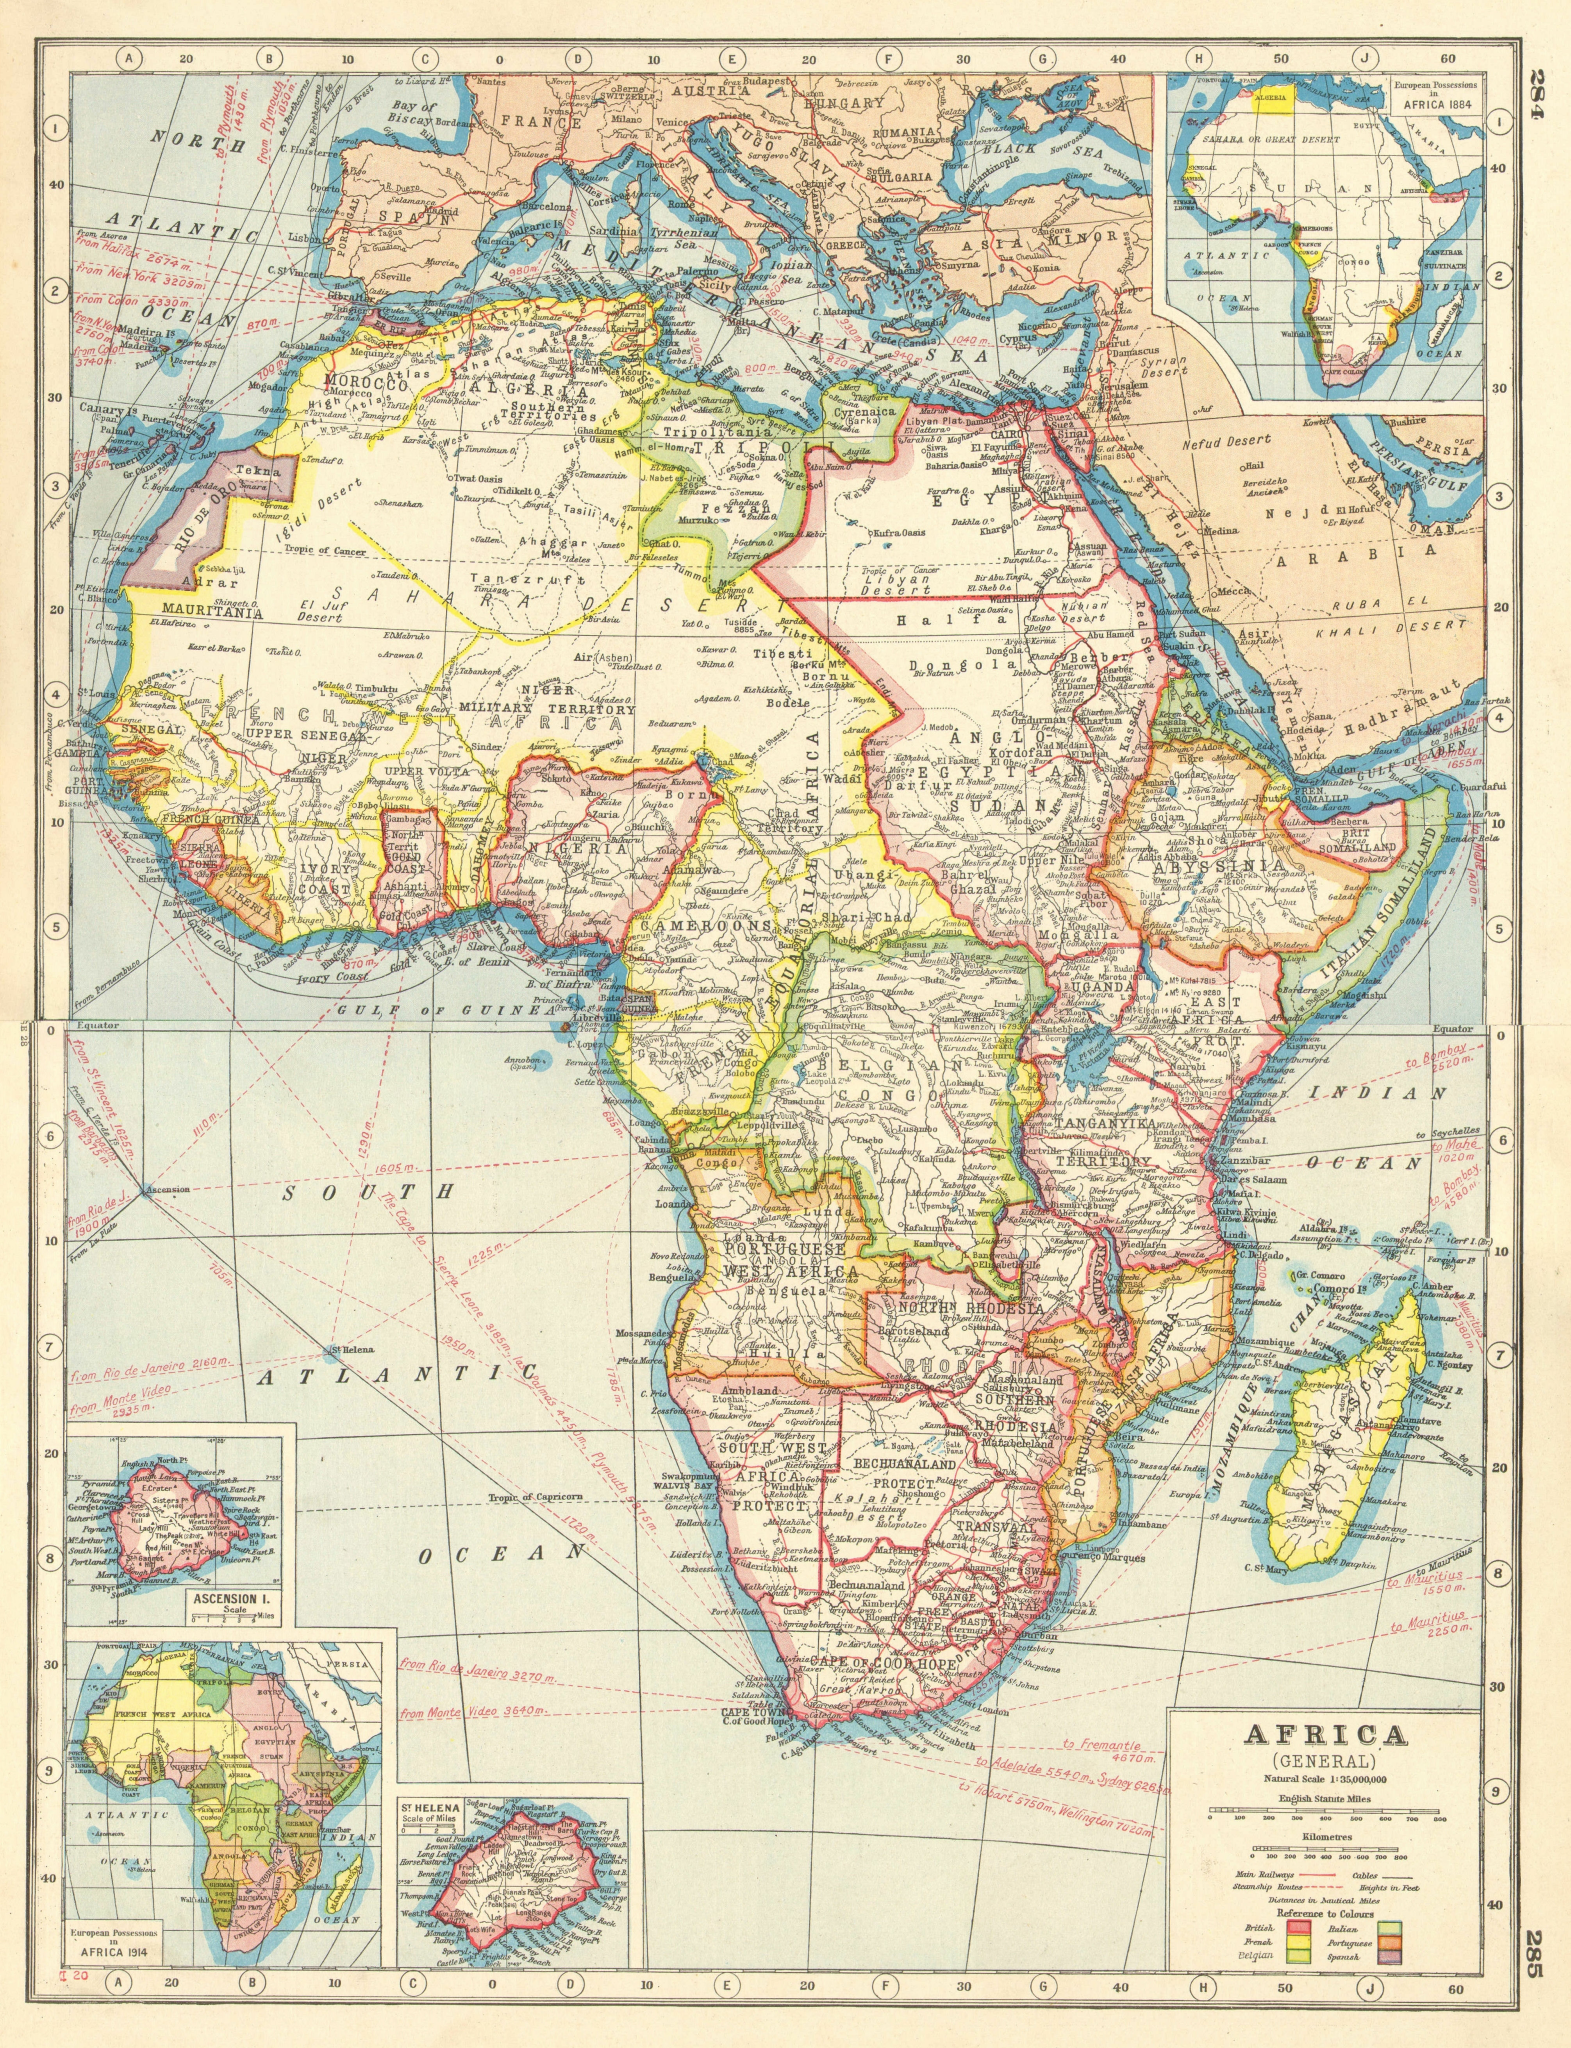 COLONIAL AFRICA. Rhodesia Er Rif Rio de Oro. Railways. Inset 1884/1914 1920 map